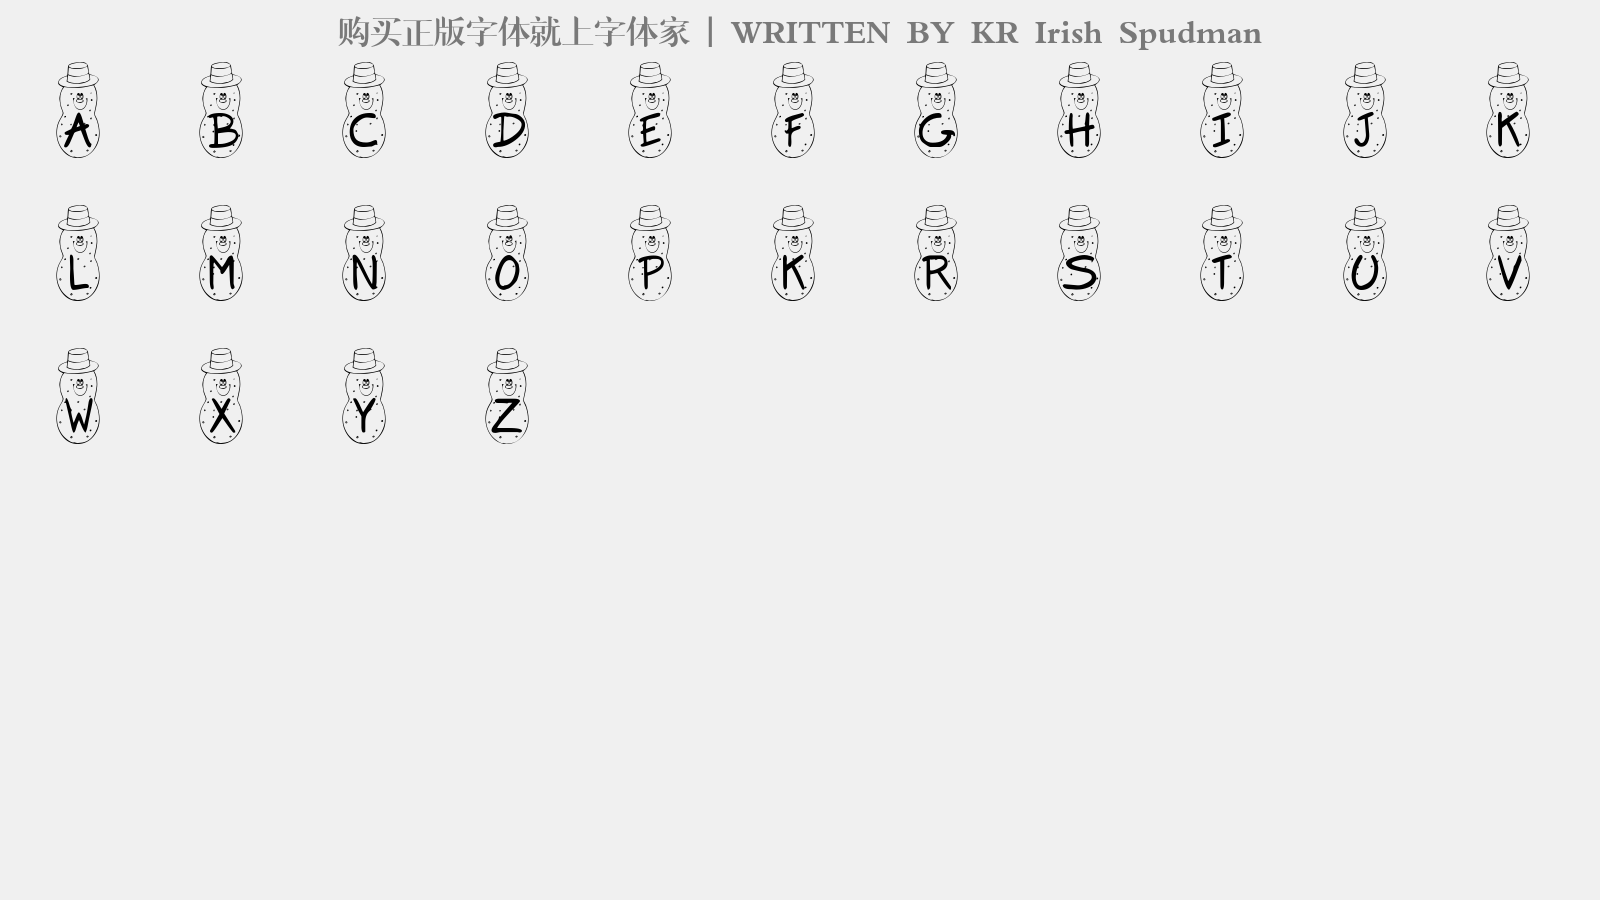 KR Irish Spudman - 大写字母/小写字母/数字